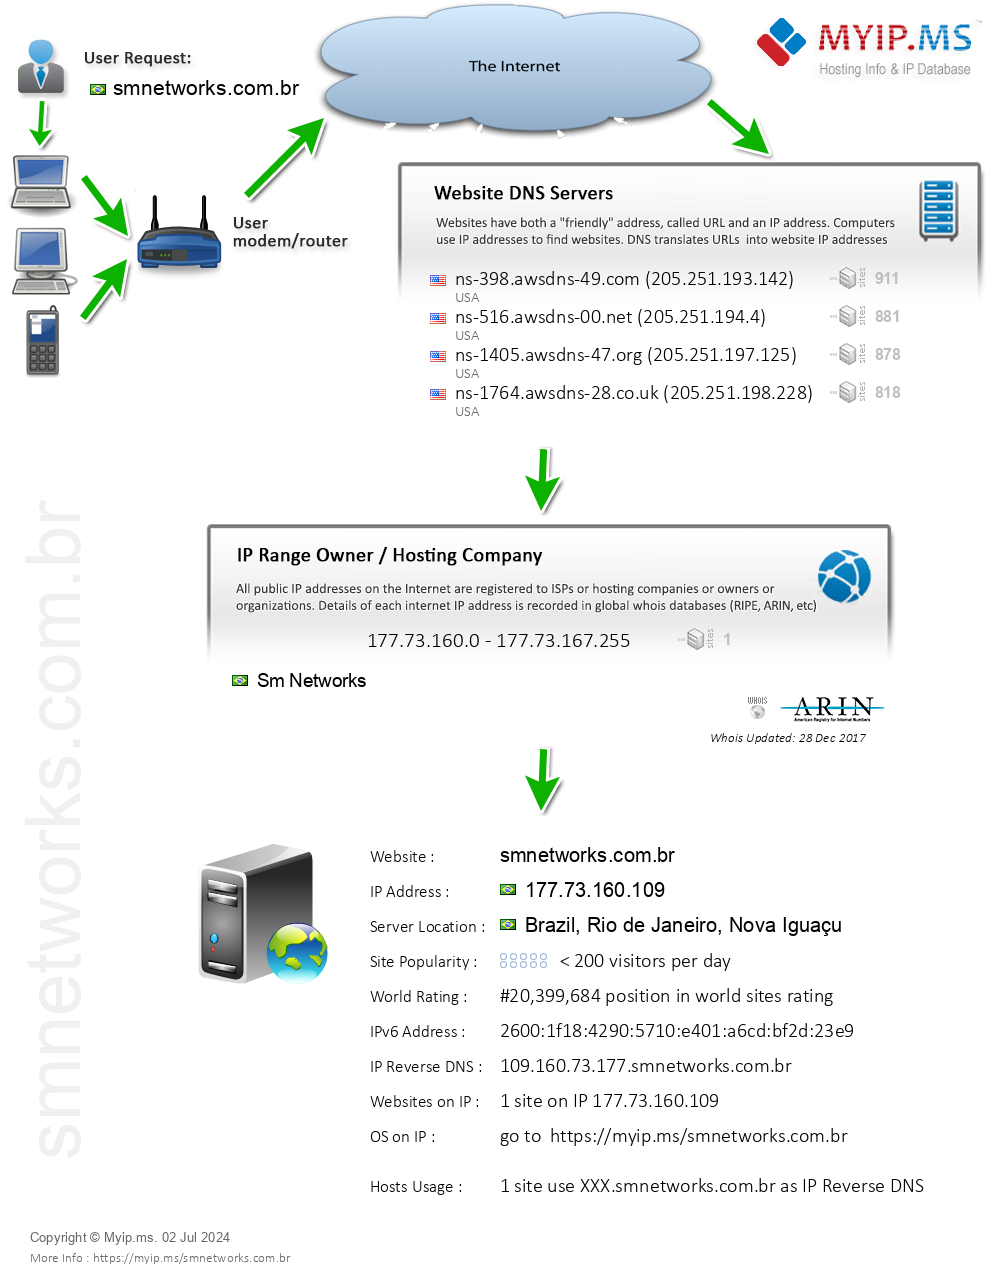 Smnetworks.com.br - Website Hosting Visual IP Diagram